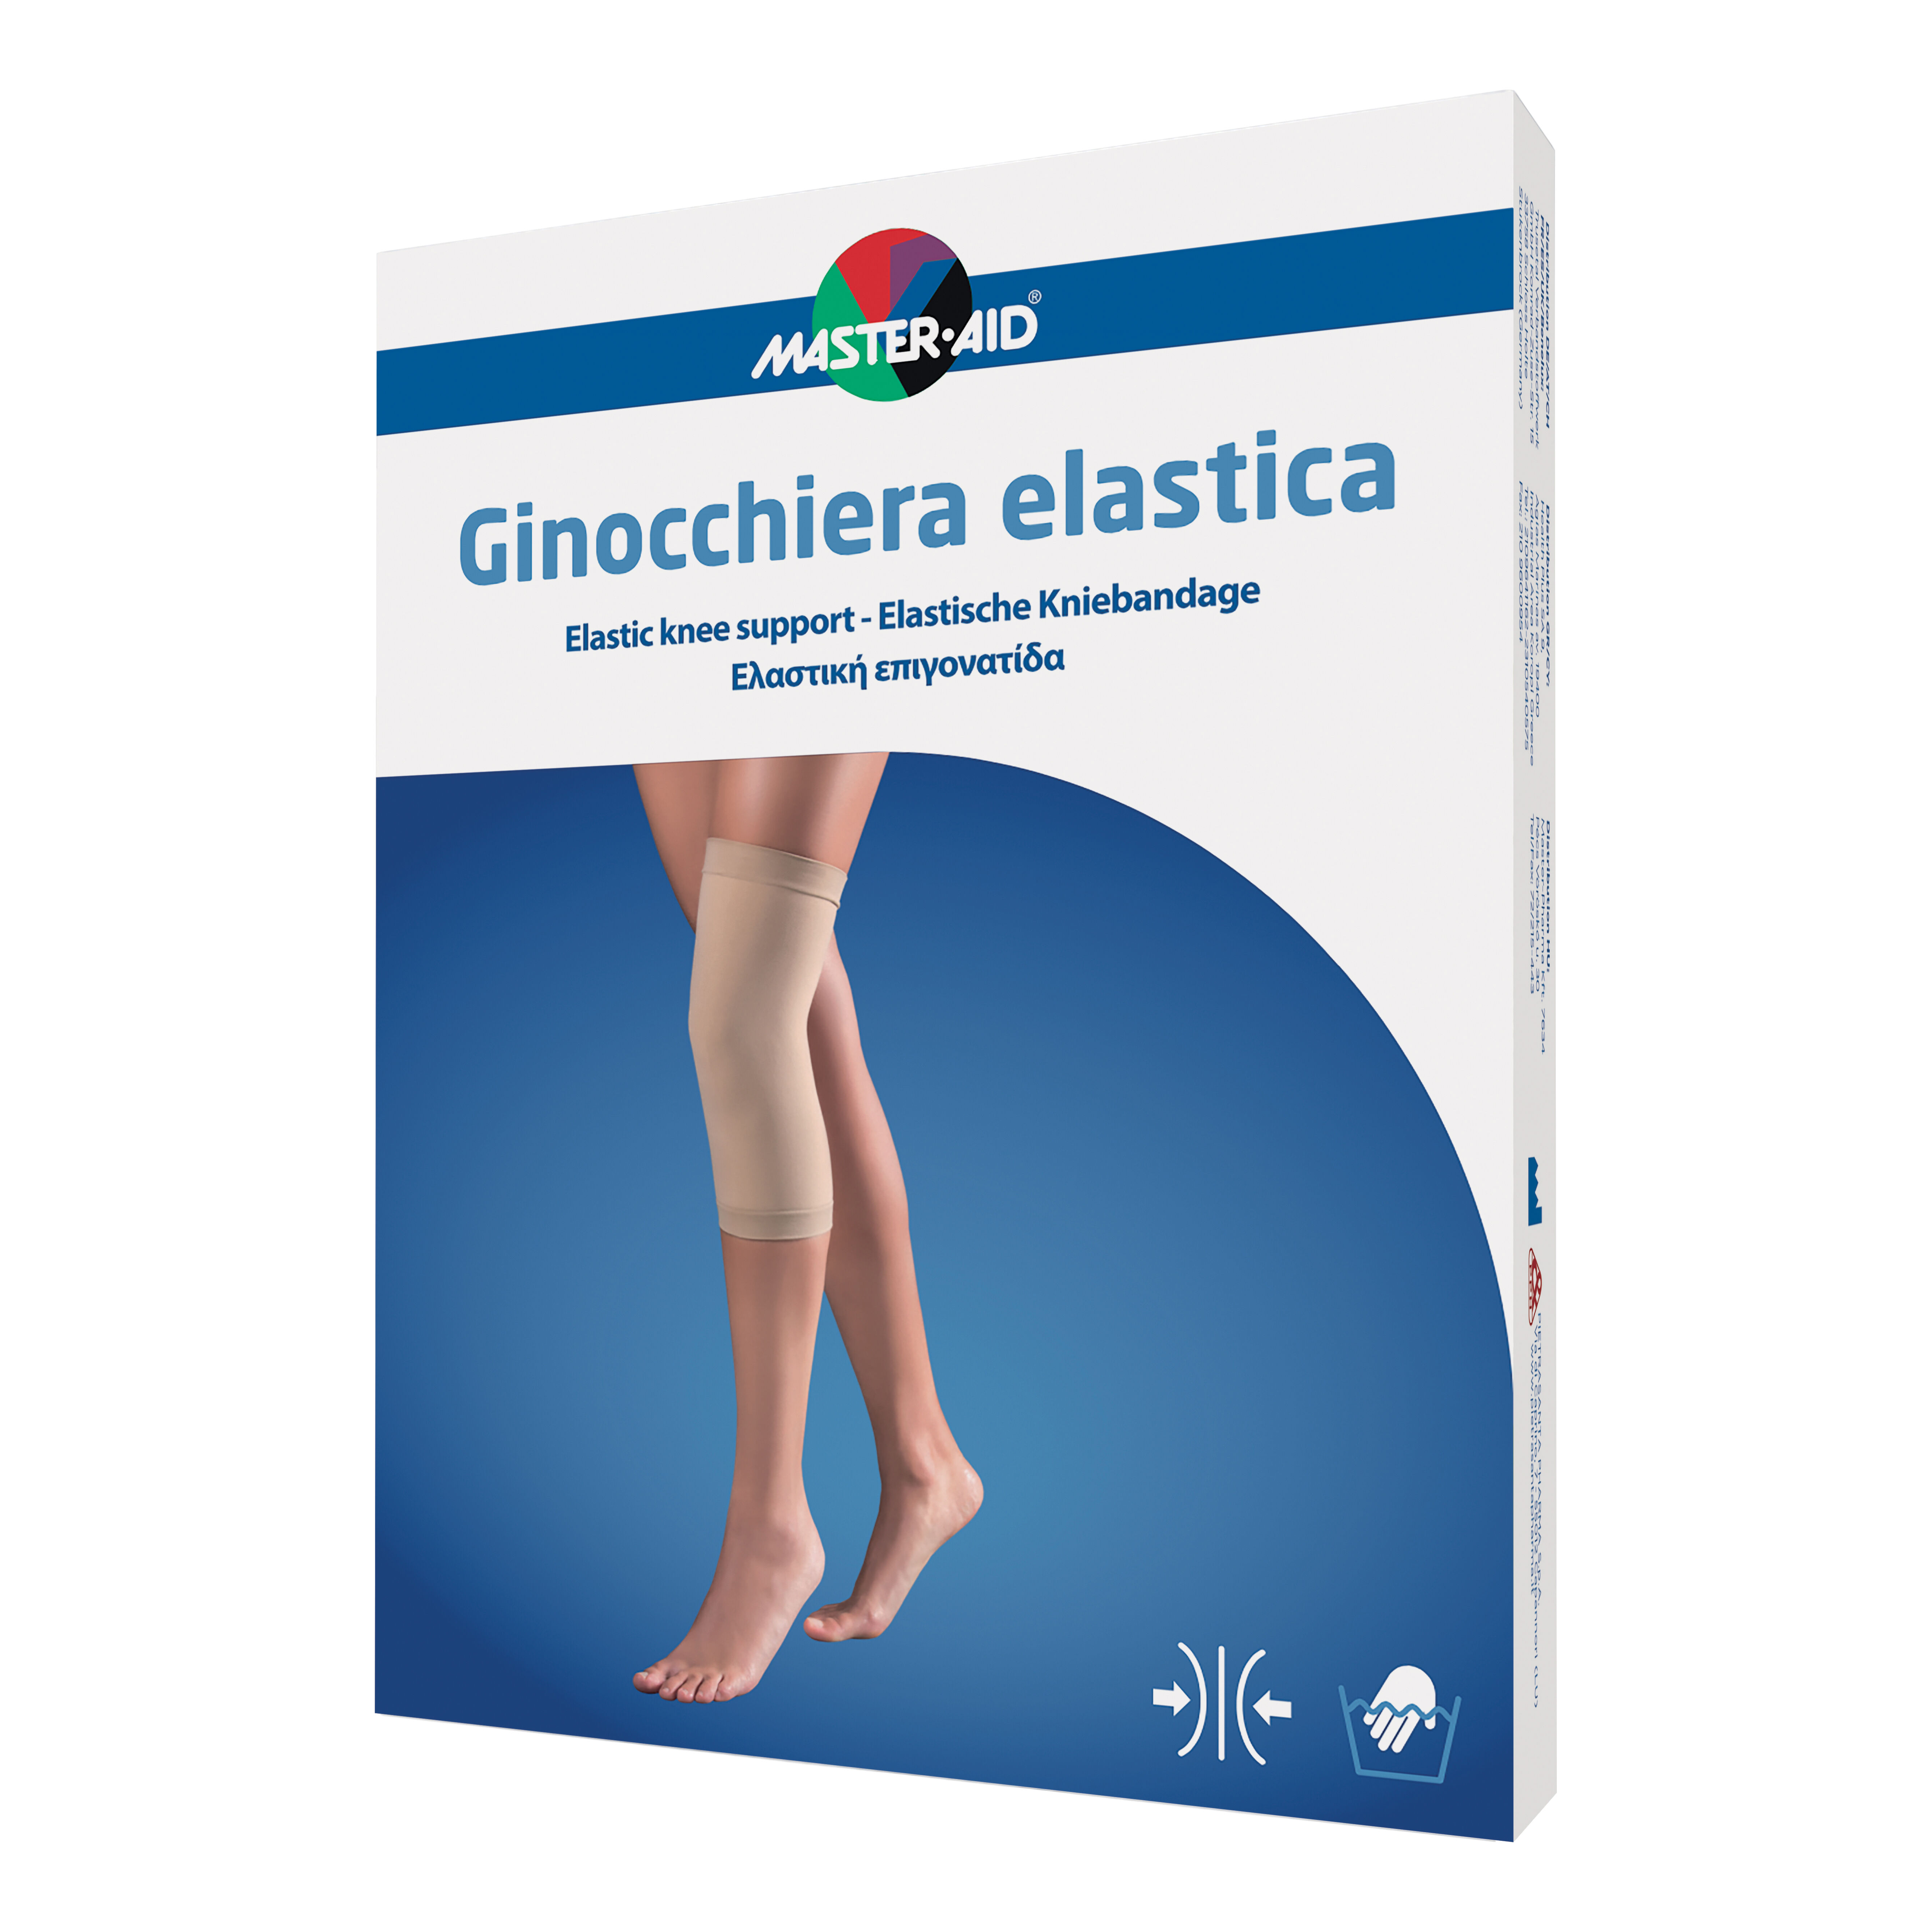 MASTER AID Ginocchiera elastica master-aid sport taglia 3 37/41cm